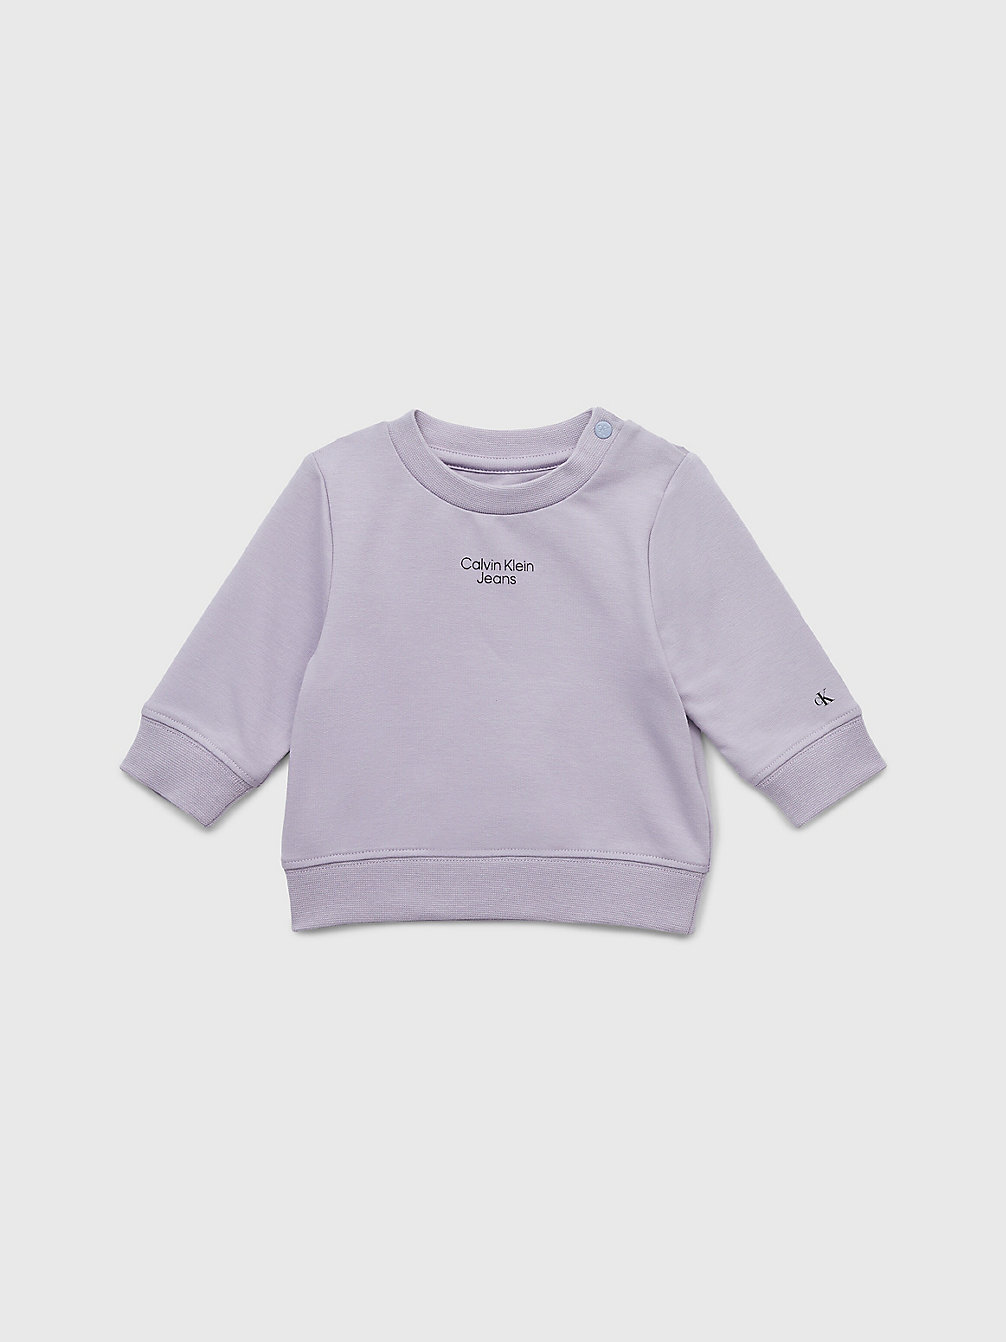 SMOKY LILAC Newborn-Sweatshirt Van Biologisch Katoen undefined newborn Calvin Klein